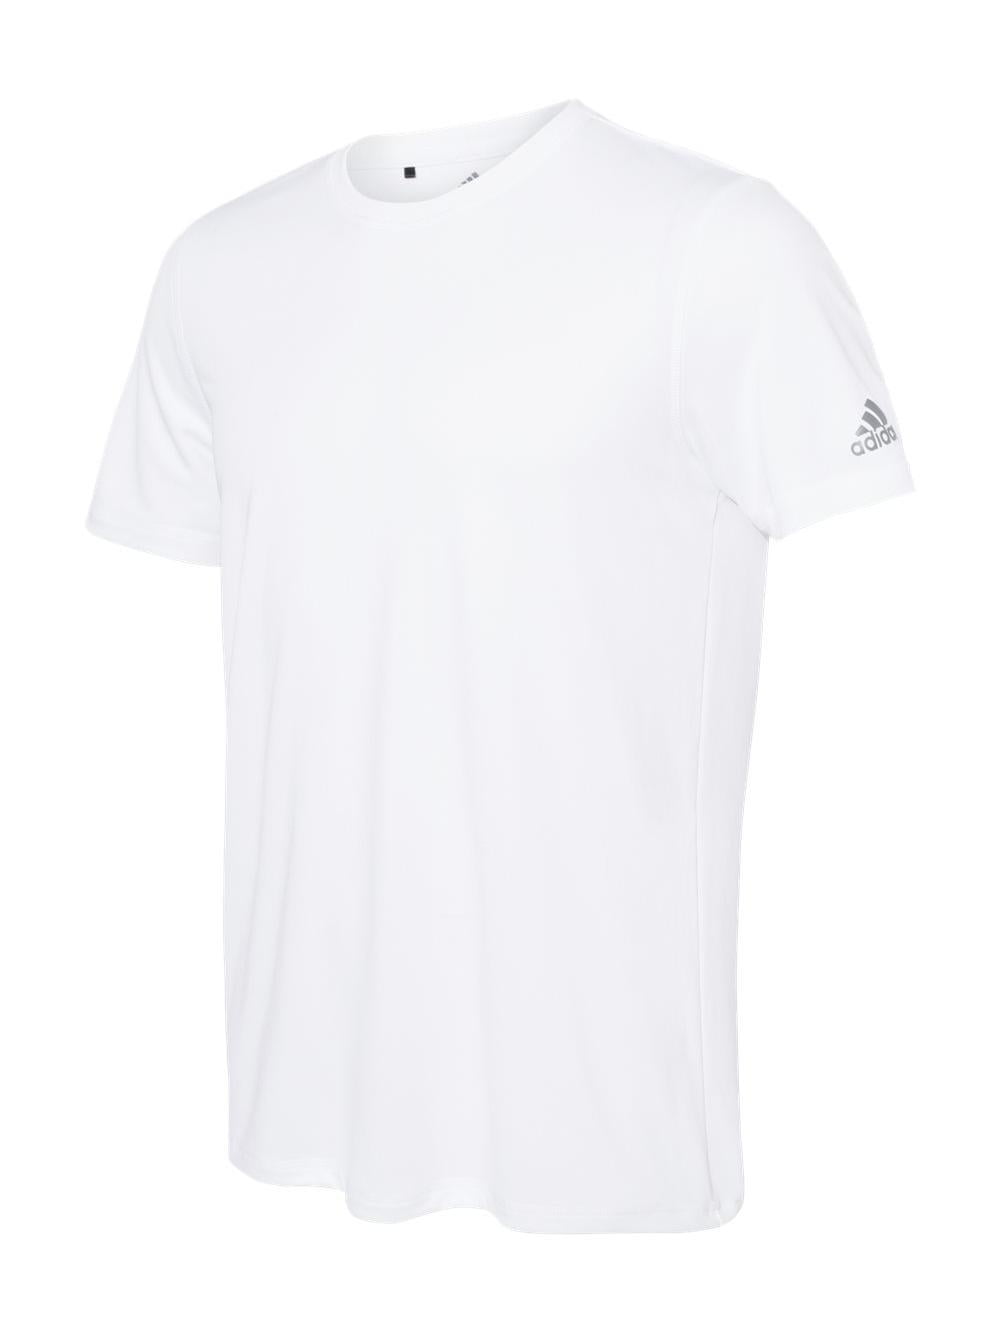 Adidas - Sport T-Shirt - A376 - Black - Size: 3XL